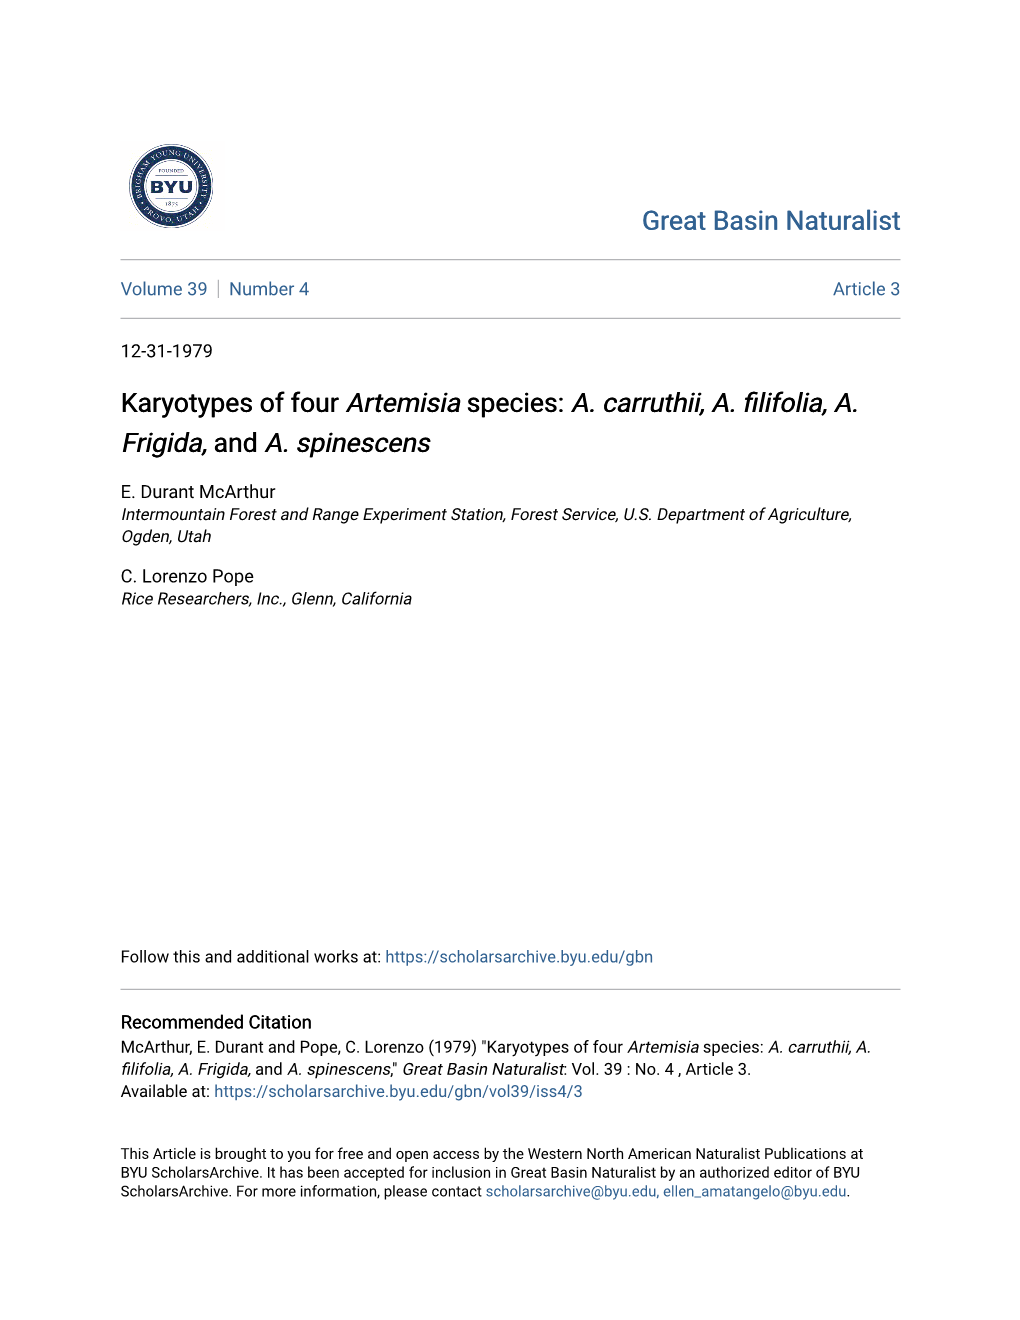 Karyotypes of Four Artemisia Species: A